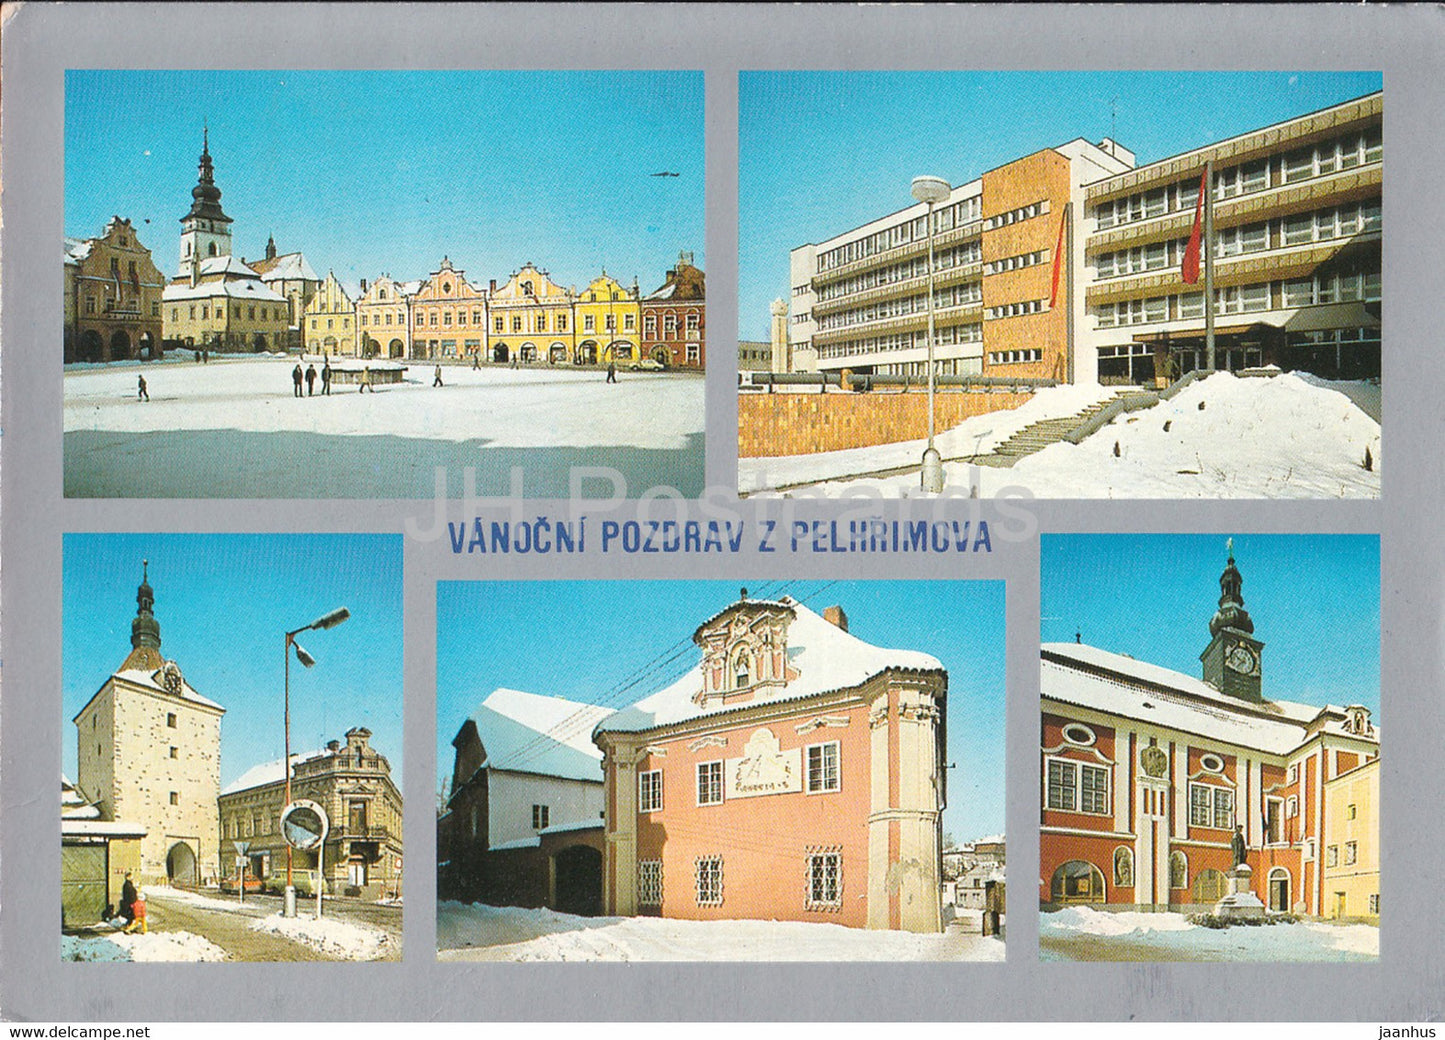 Christmas Greeting - Vanocni Pozdrav z Pelhrimova - Pelhrimov - 1983 - Czechoslovakia - Czech Republic - used - JH Postcards